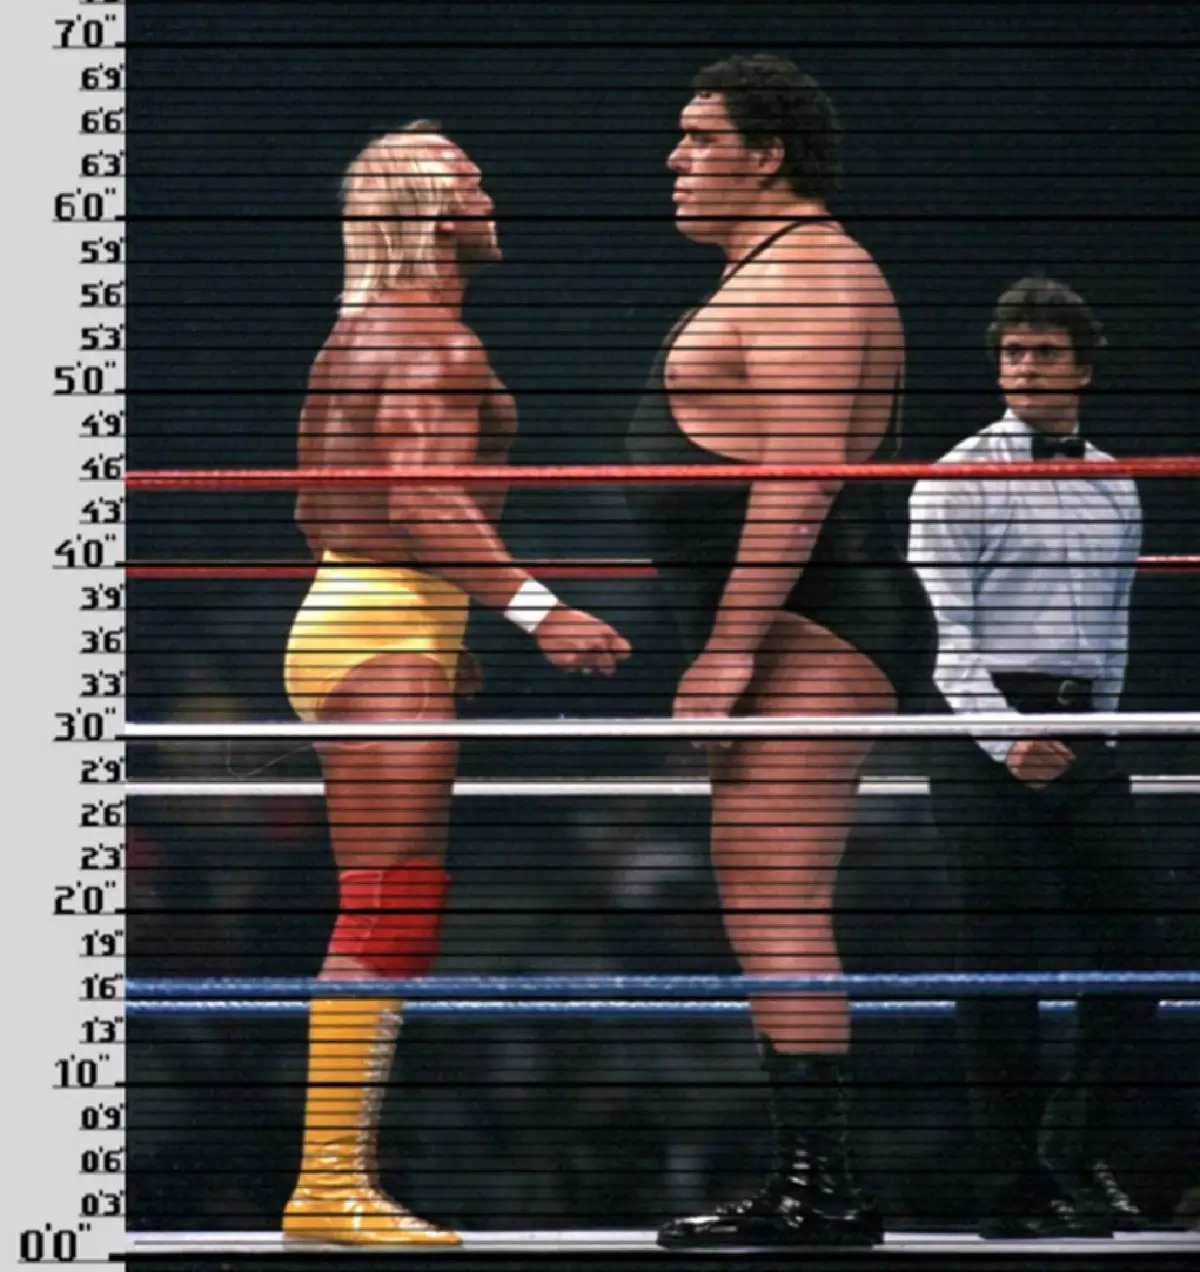 Hulk Hogan standing tall in the wrestling ring